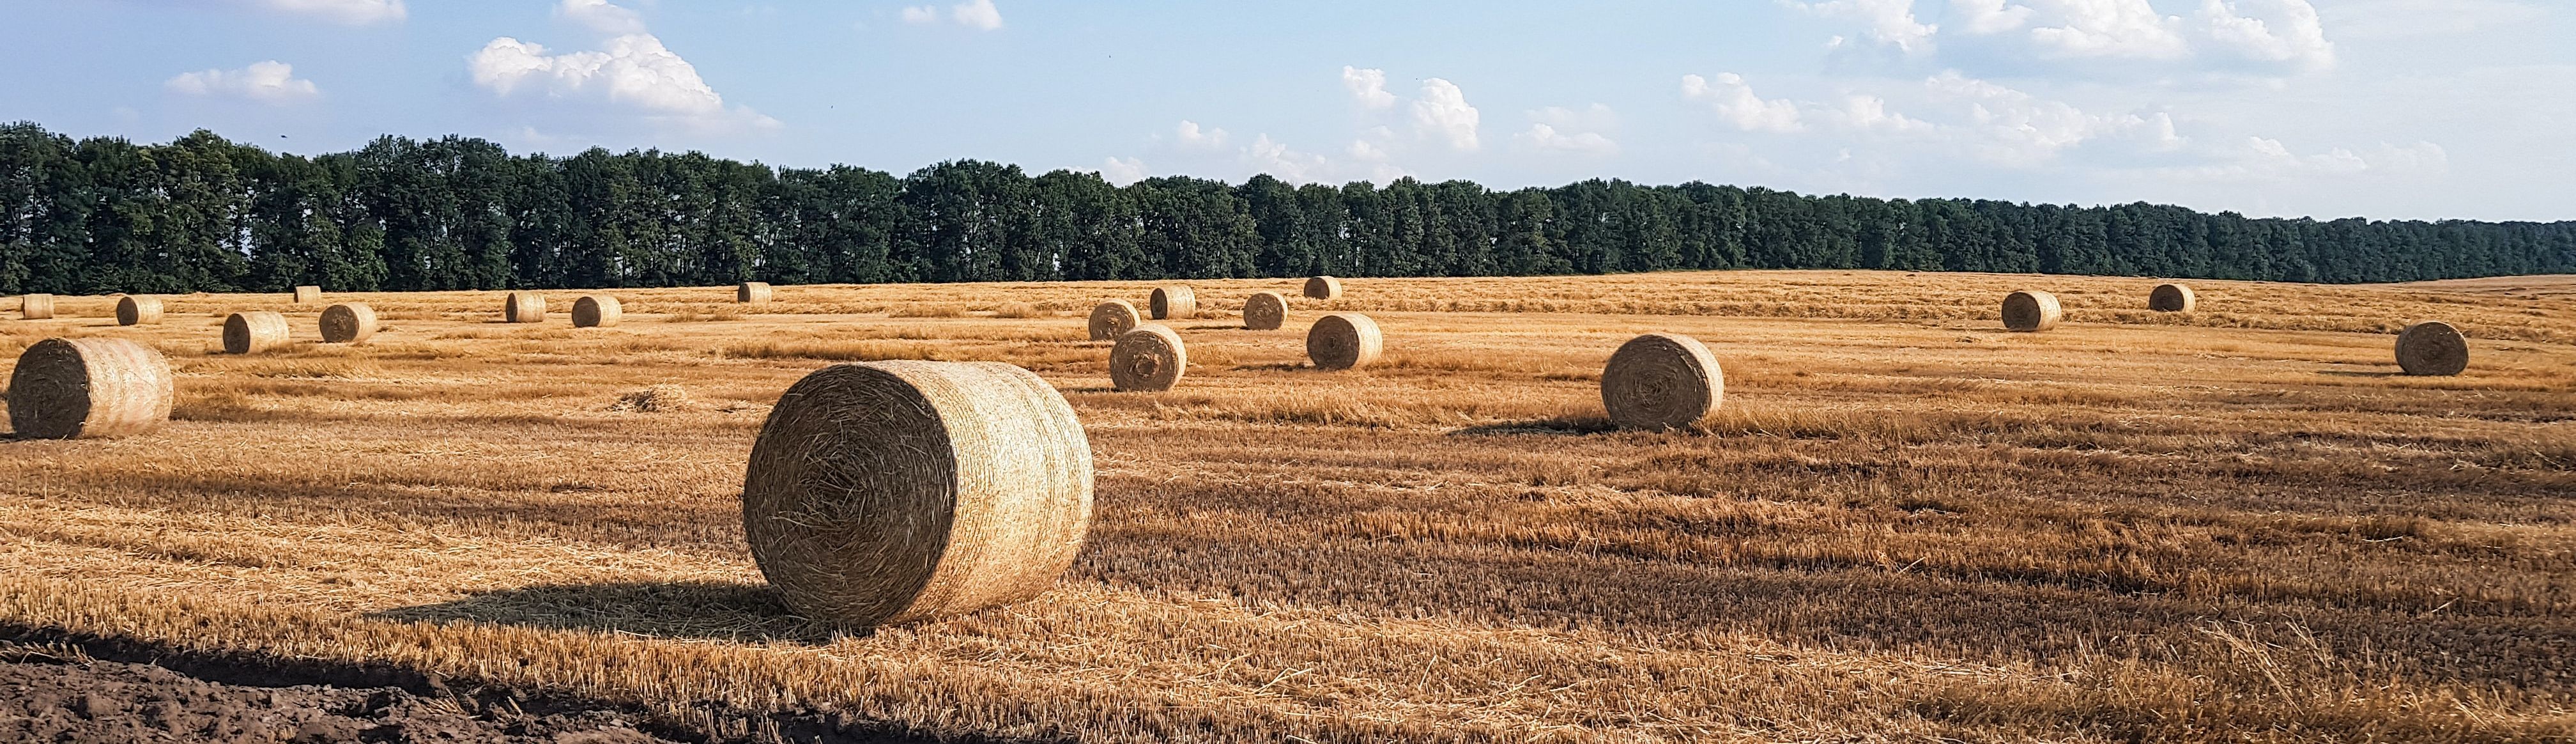 Summer hay on a wheat field in the Ukraine. 